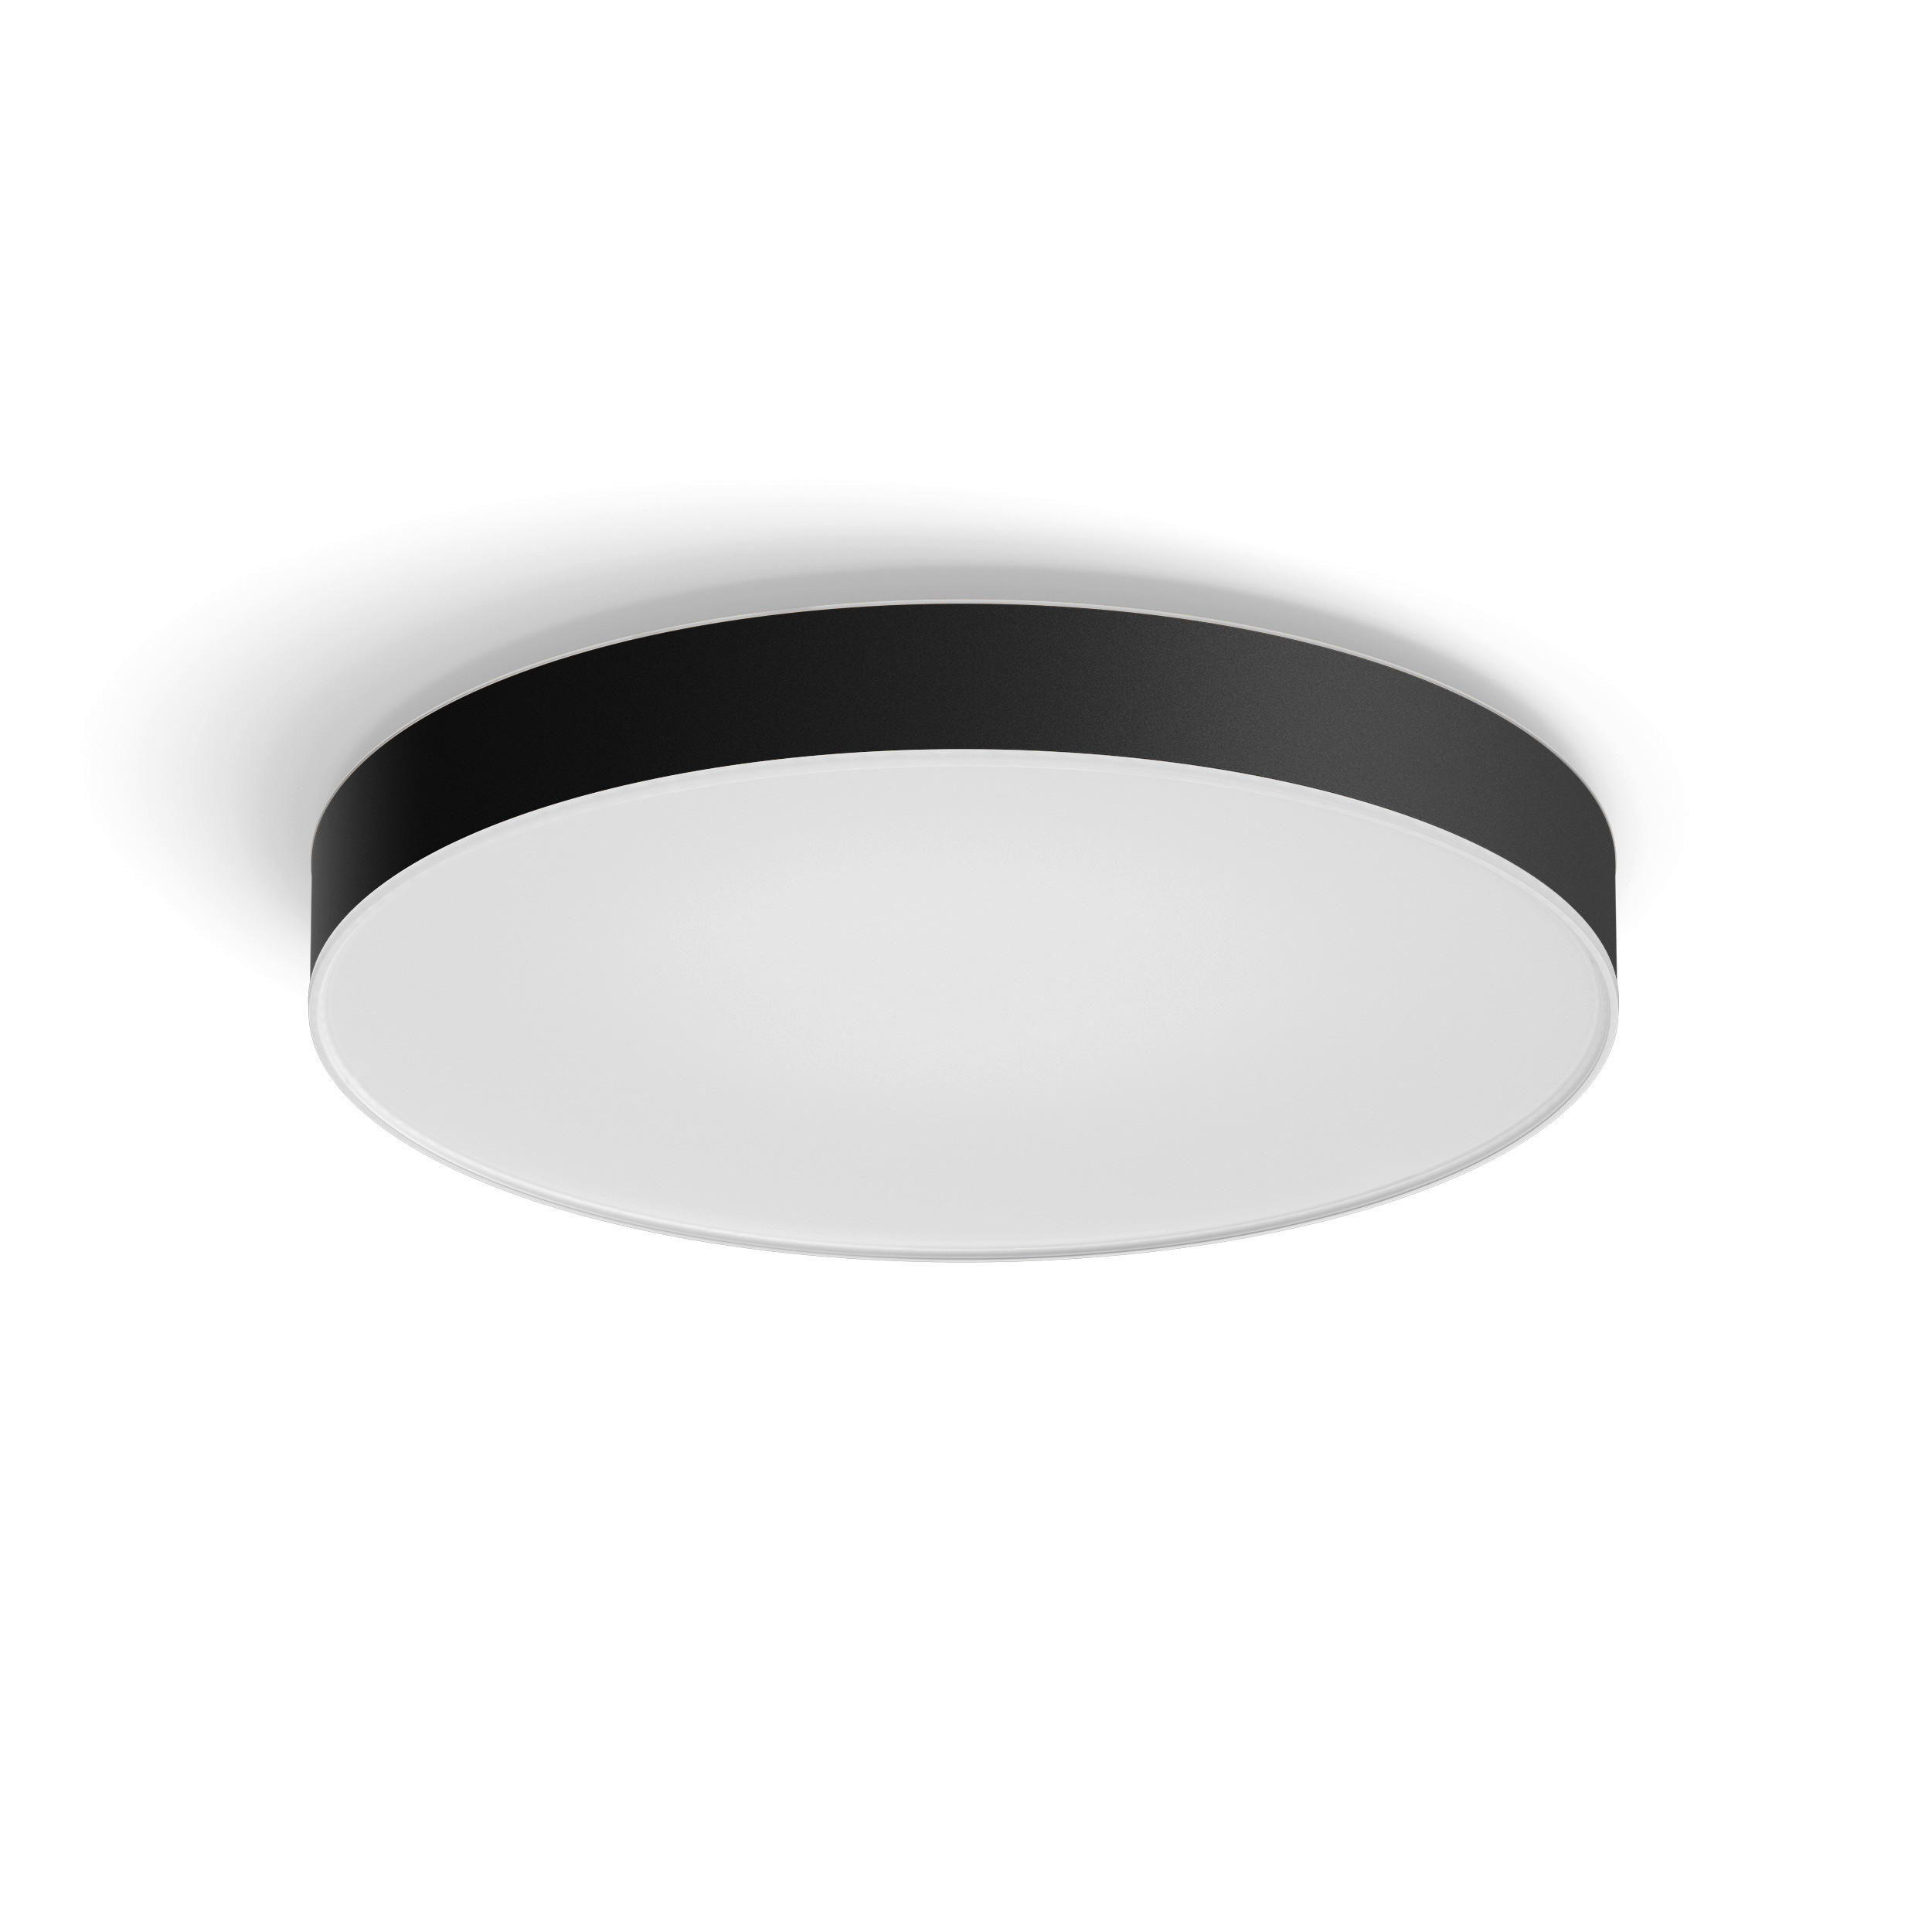 LED-DECKENLEUCHTE Enrave XL 55,1/8,4 cm   - Schwarz, Design, Metall (55,1/8,4cm) - Philips HUE